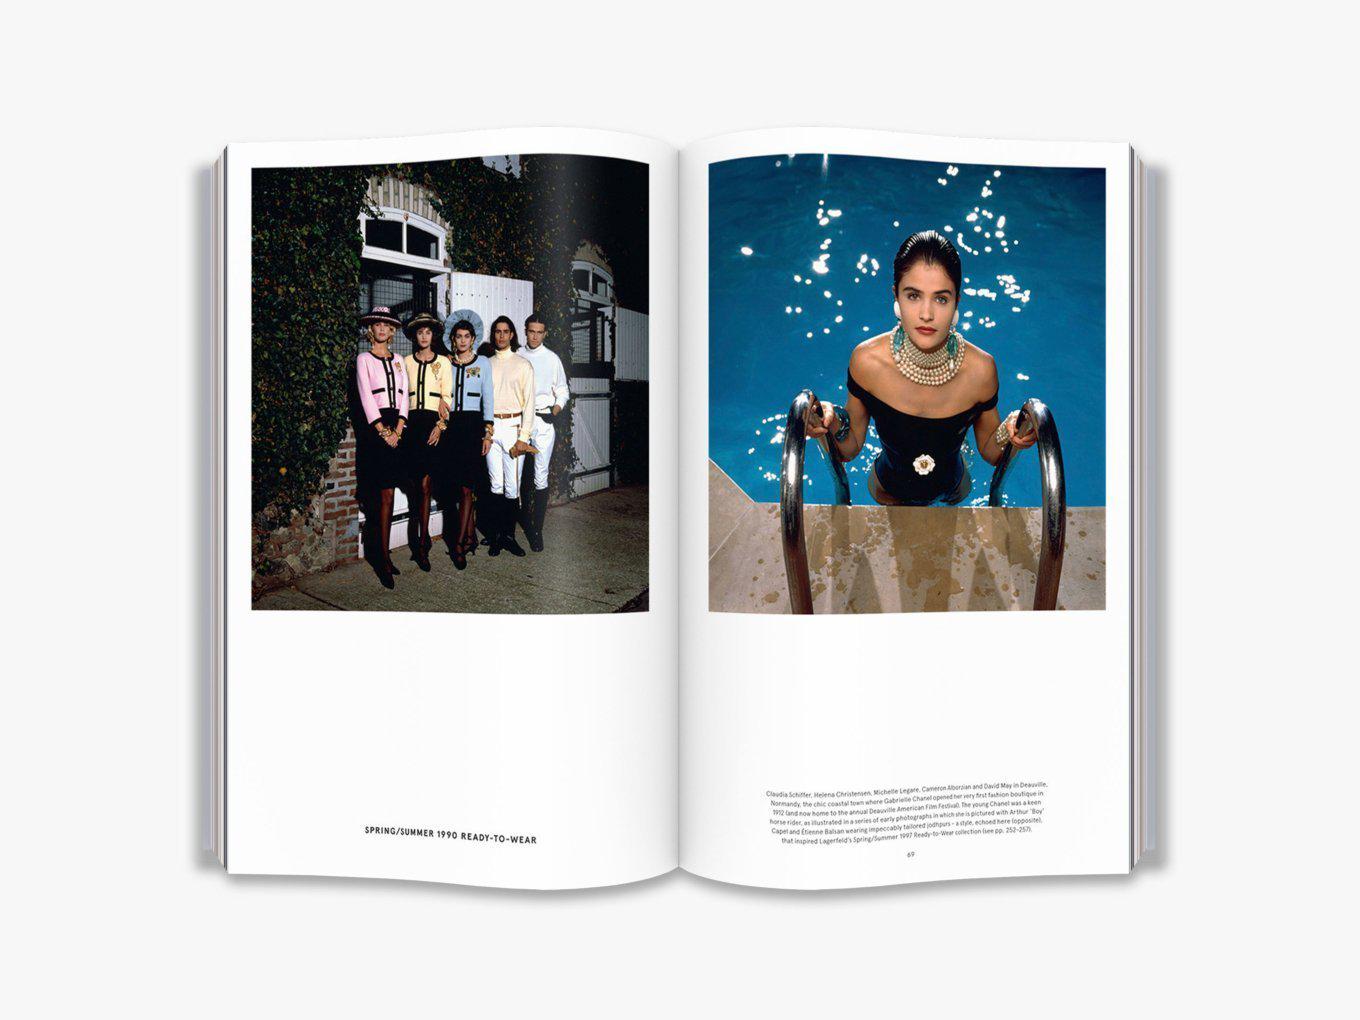 THAMES & HUDSON - Chanel The Karl Lagerfeld Campaigns - Coffee Table Book-TOJU Interior